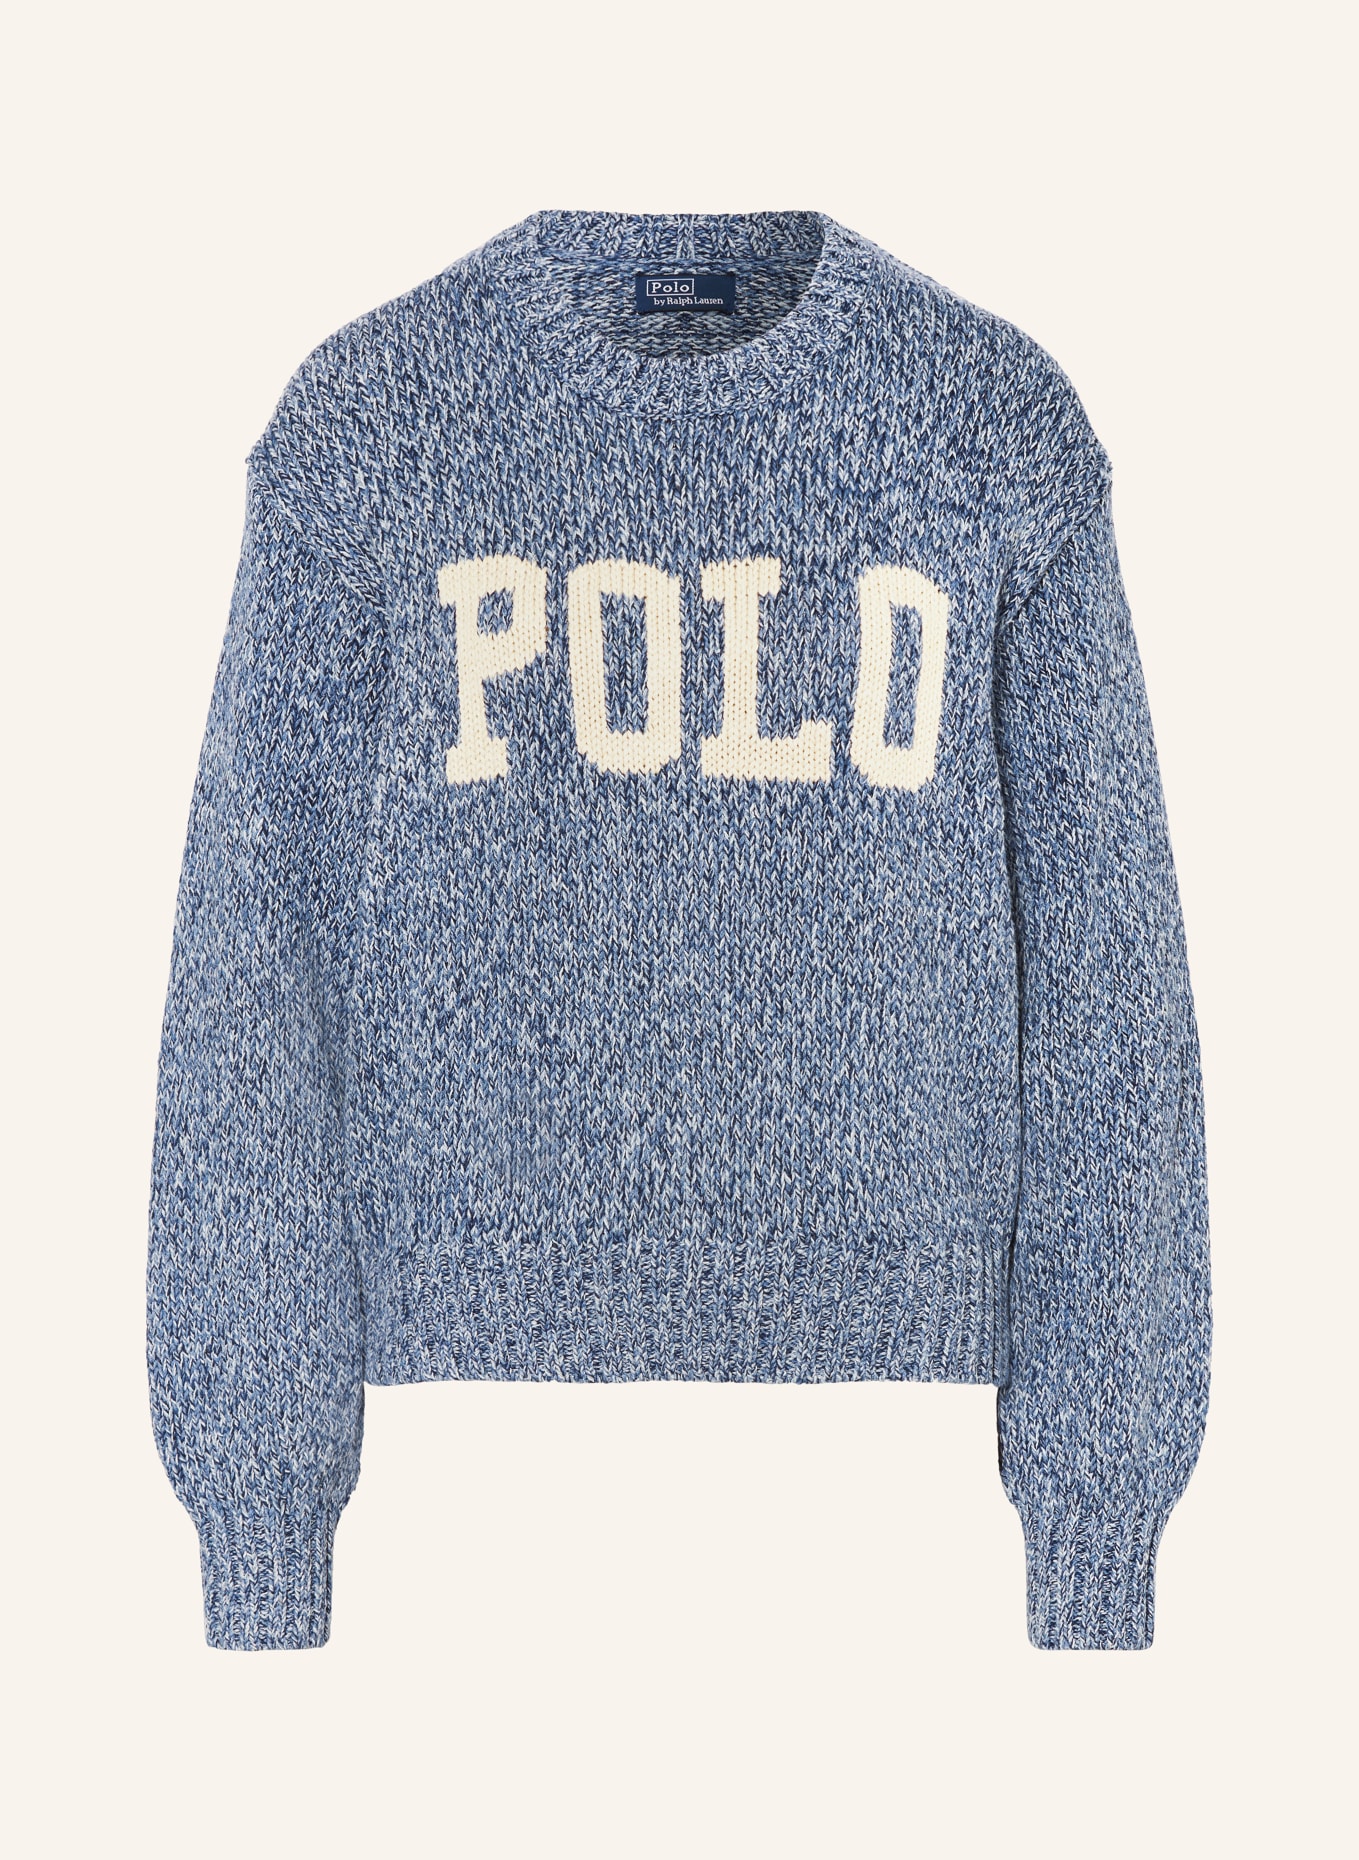 POLO RALPH LAUREN Sweater in blue/ light blue/ white